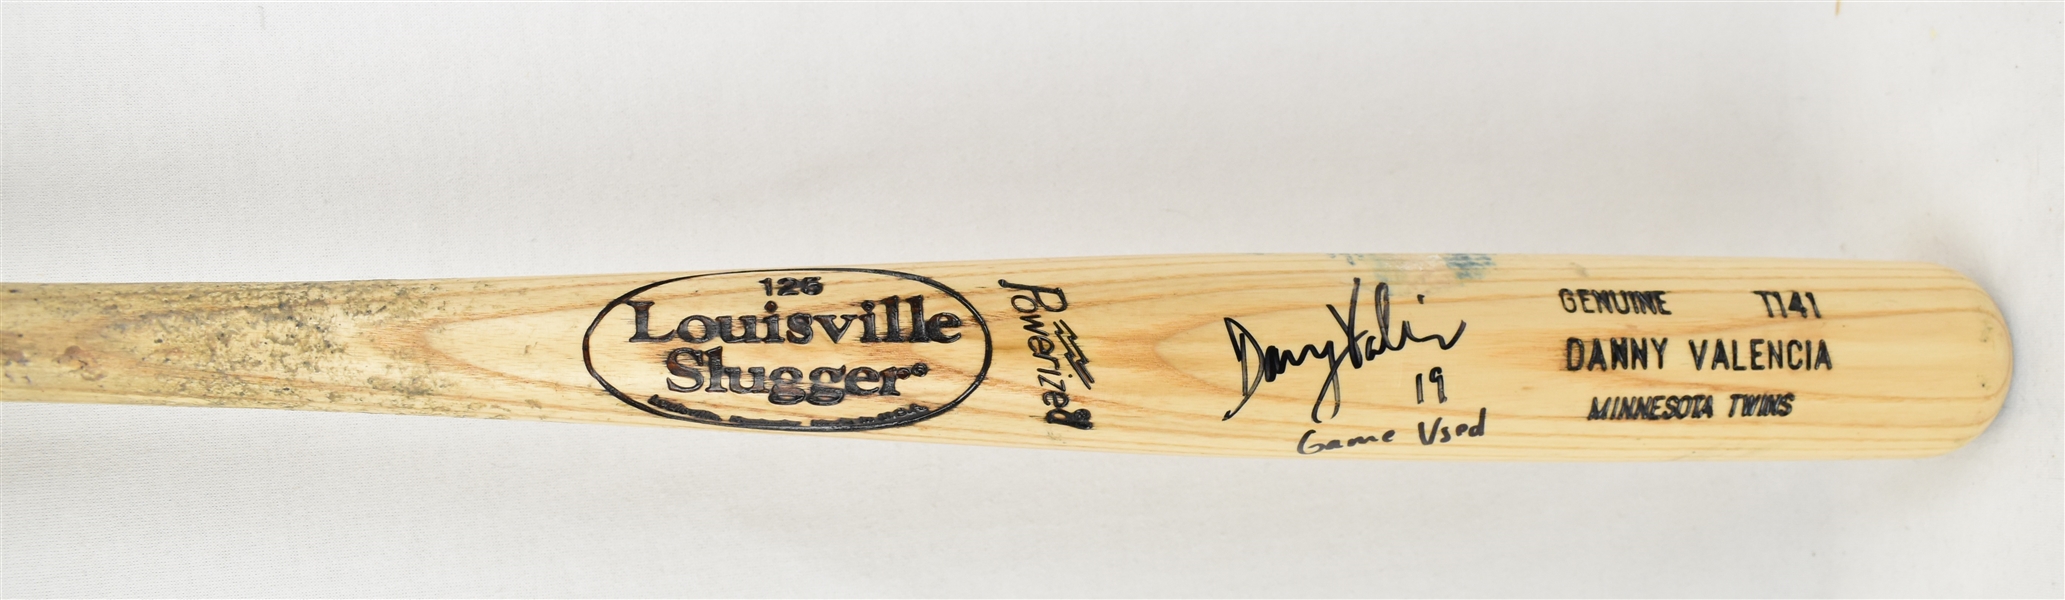 Danny Valencia 2010 Minnesota Twins Game Used & Autographed Bat